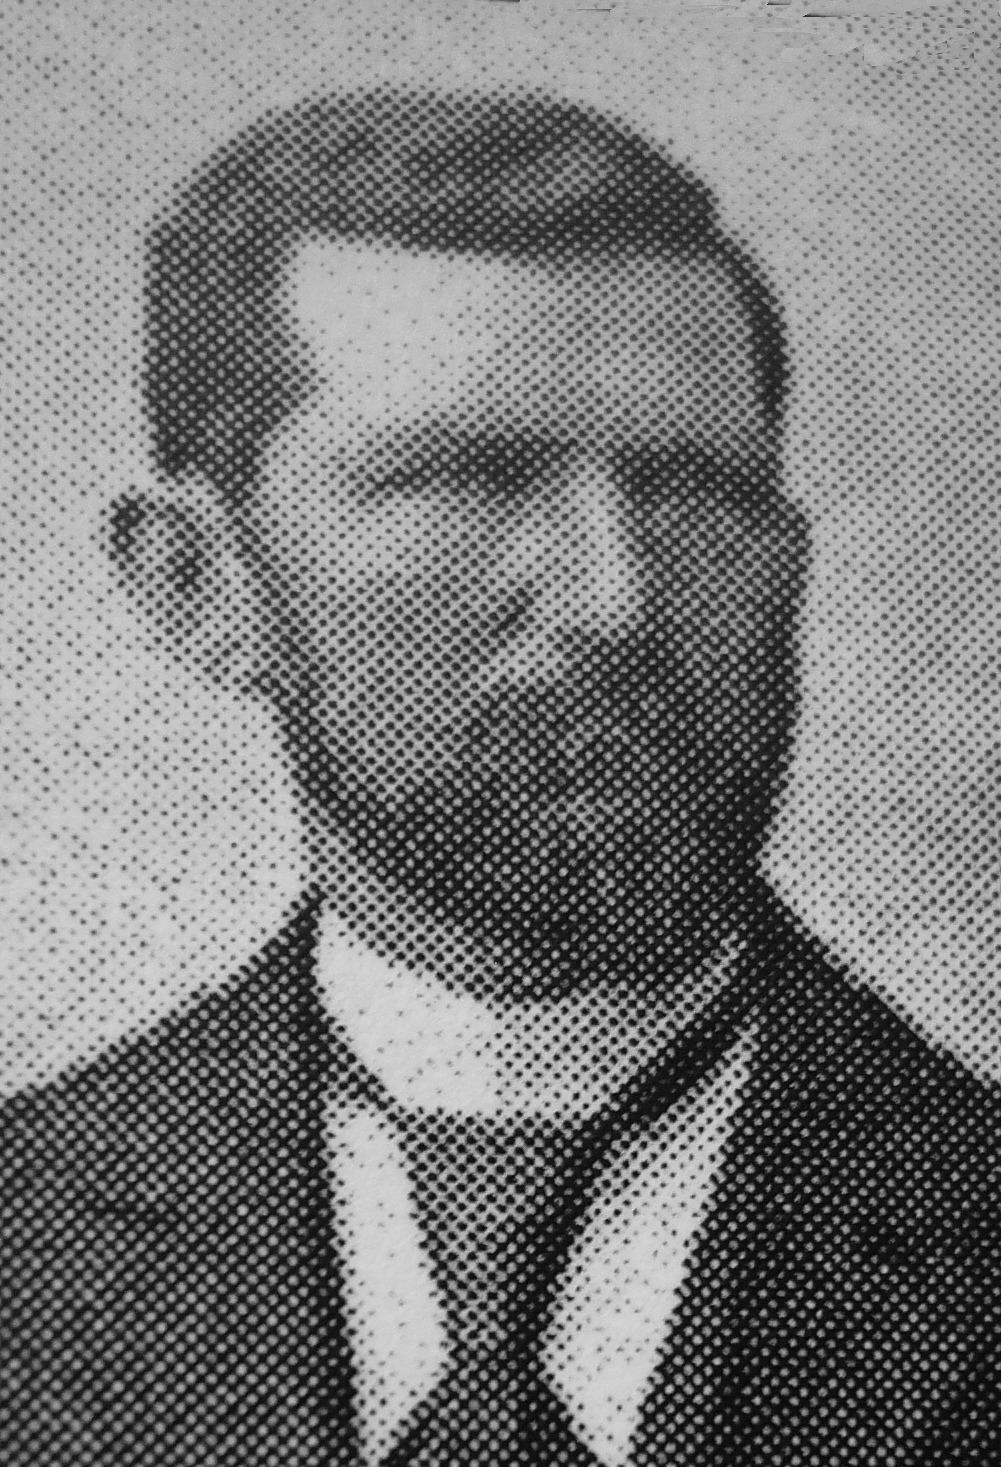 Christian Stucki (1859 - 1952)